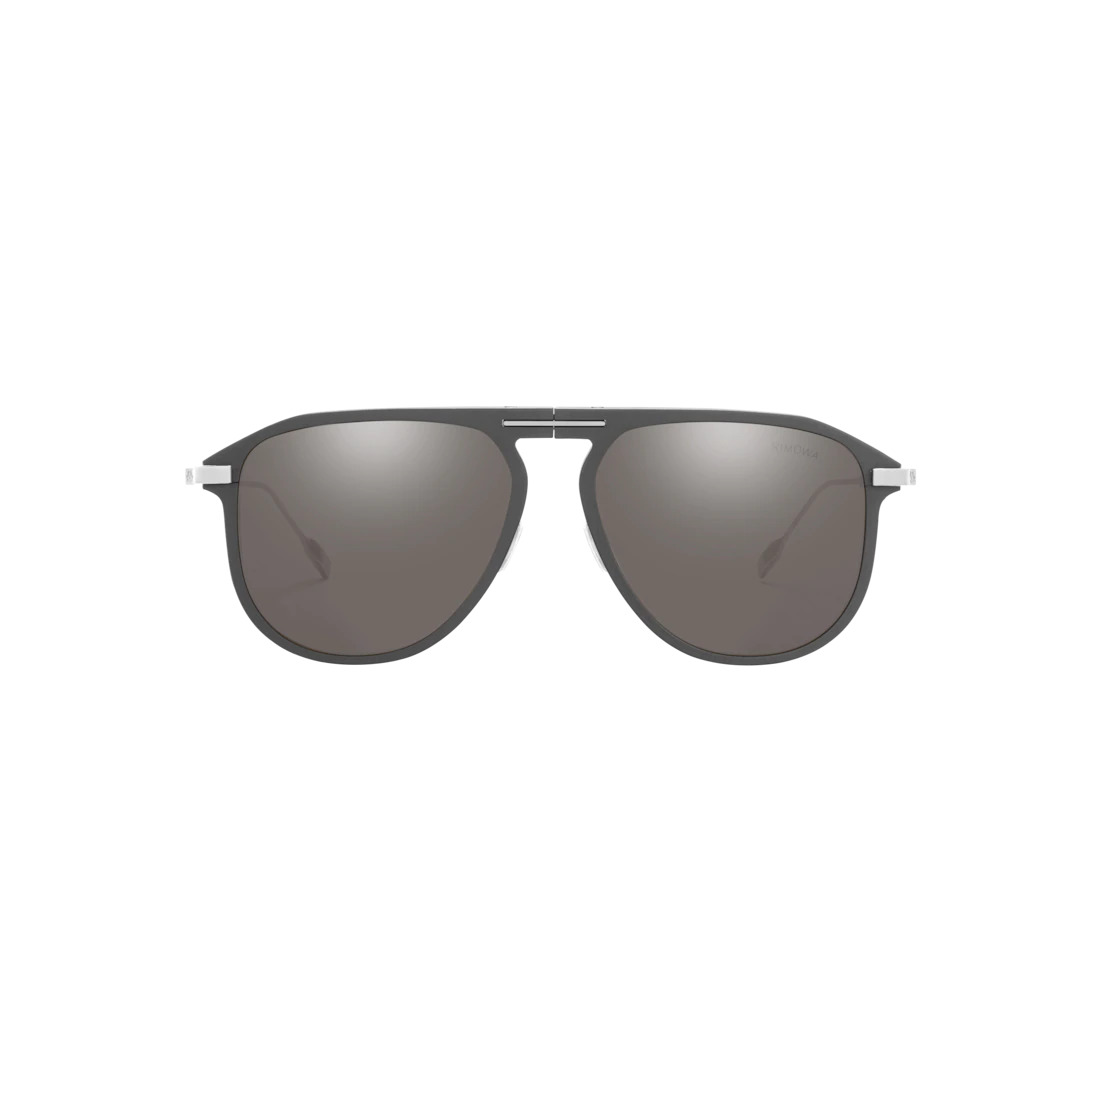 Eyewear Pilot Foldable Mercury Gray Sunglasses - 1